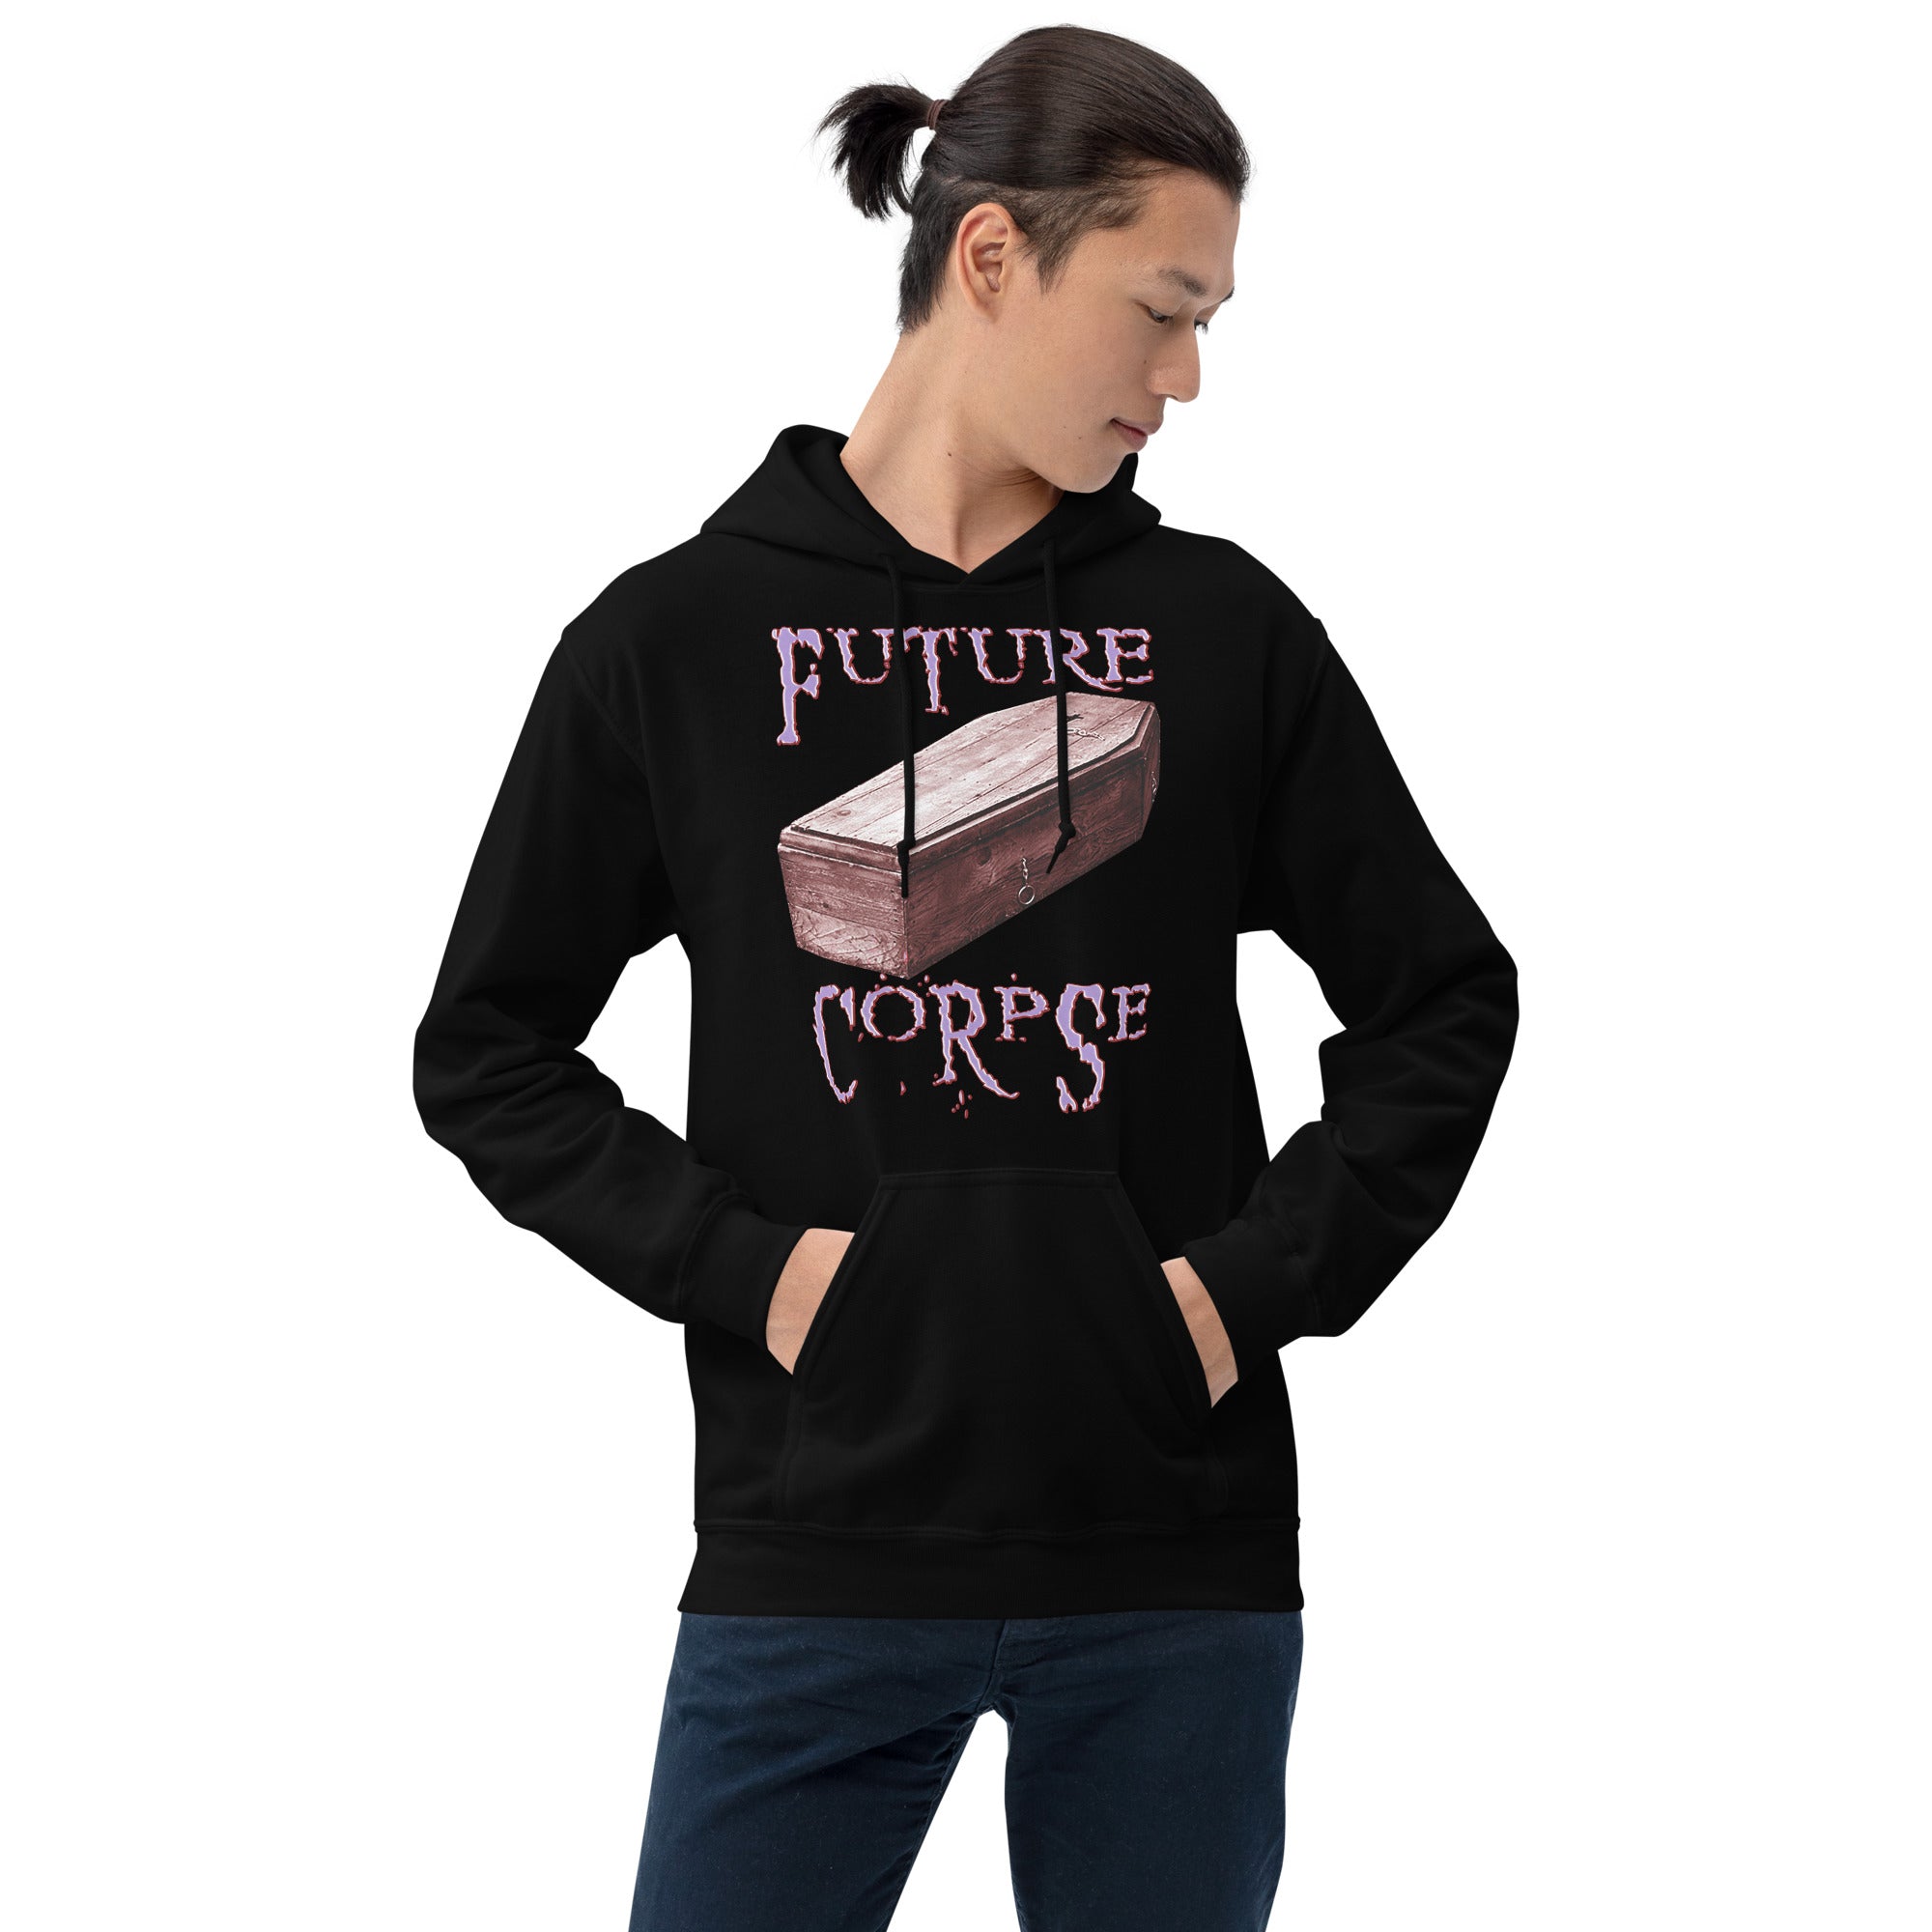 Future Corpse Toe Pincher Coffin Unisex Hoodie Sweatshirt - Edge of Life Designs